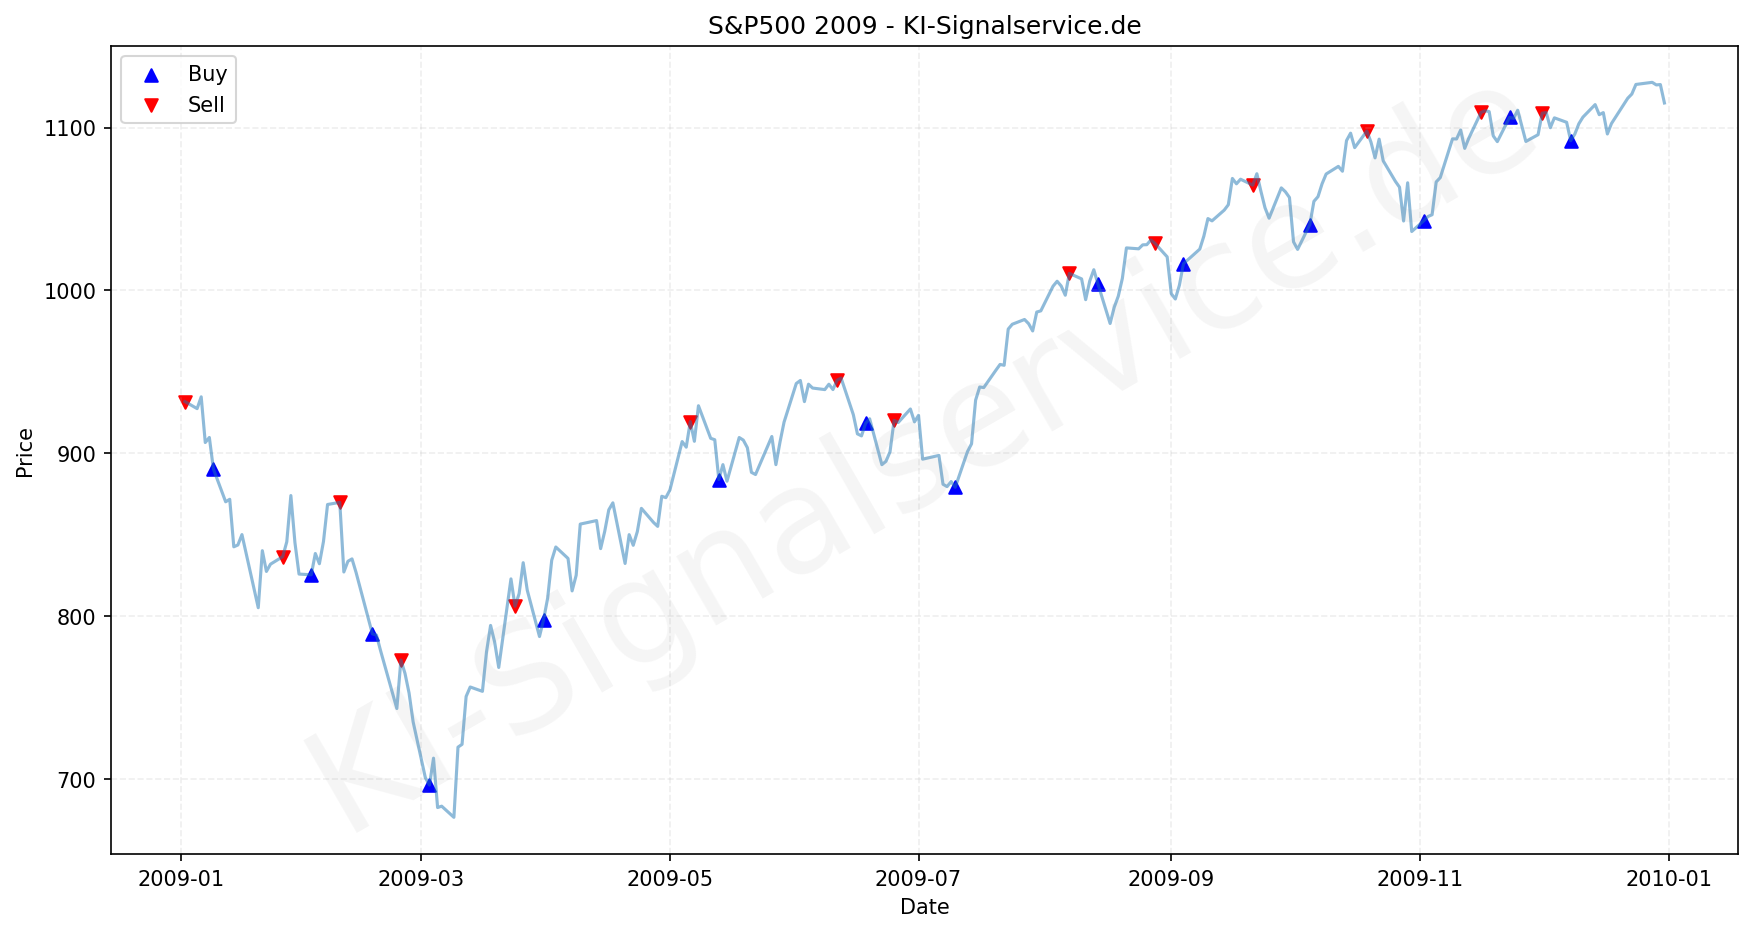 SP500 Index Performance Chart - KI Tradingsignale 2009